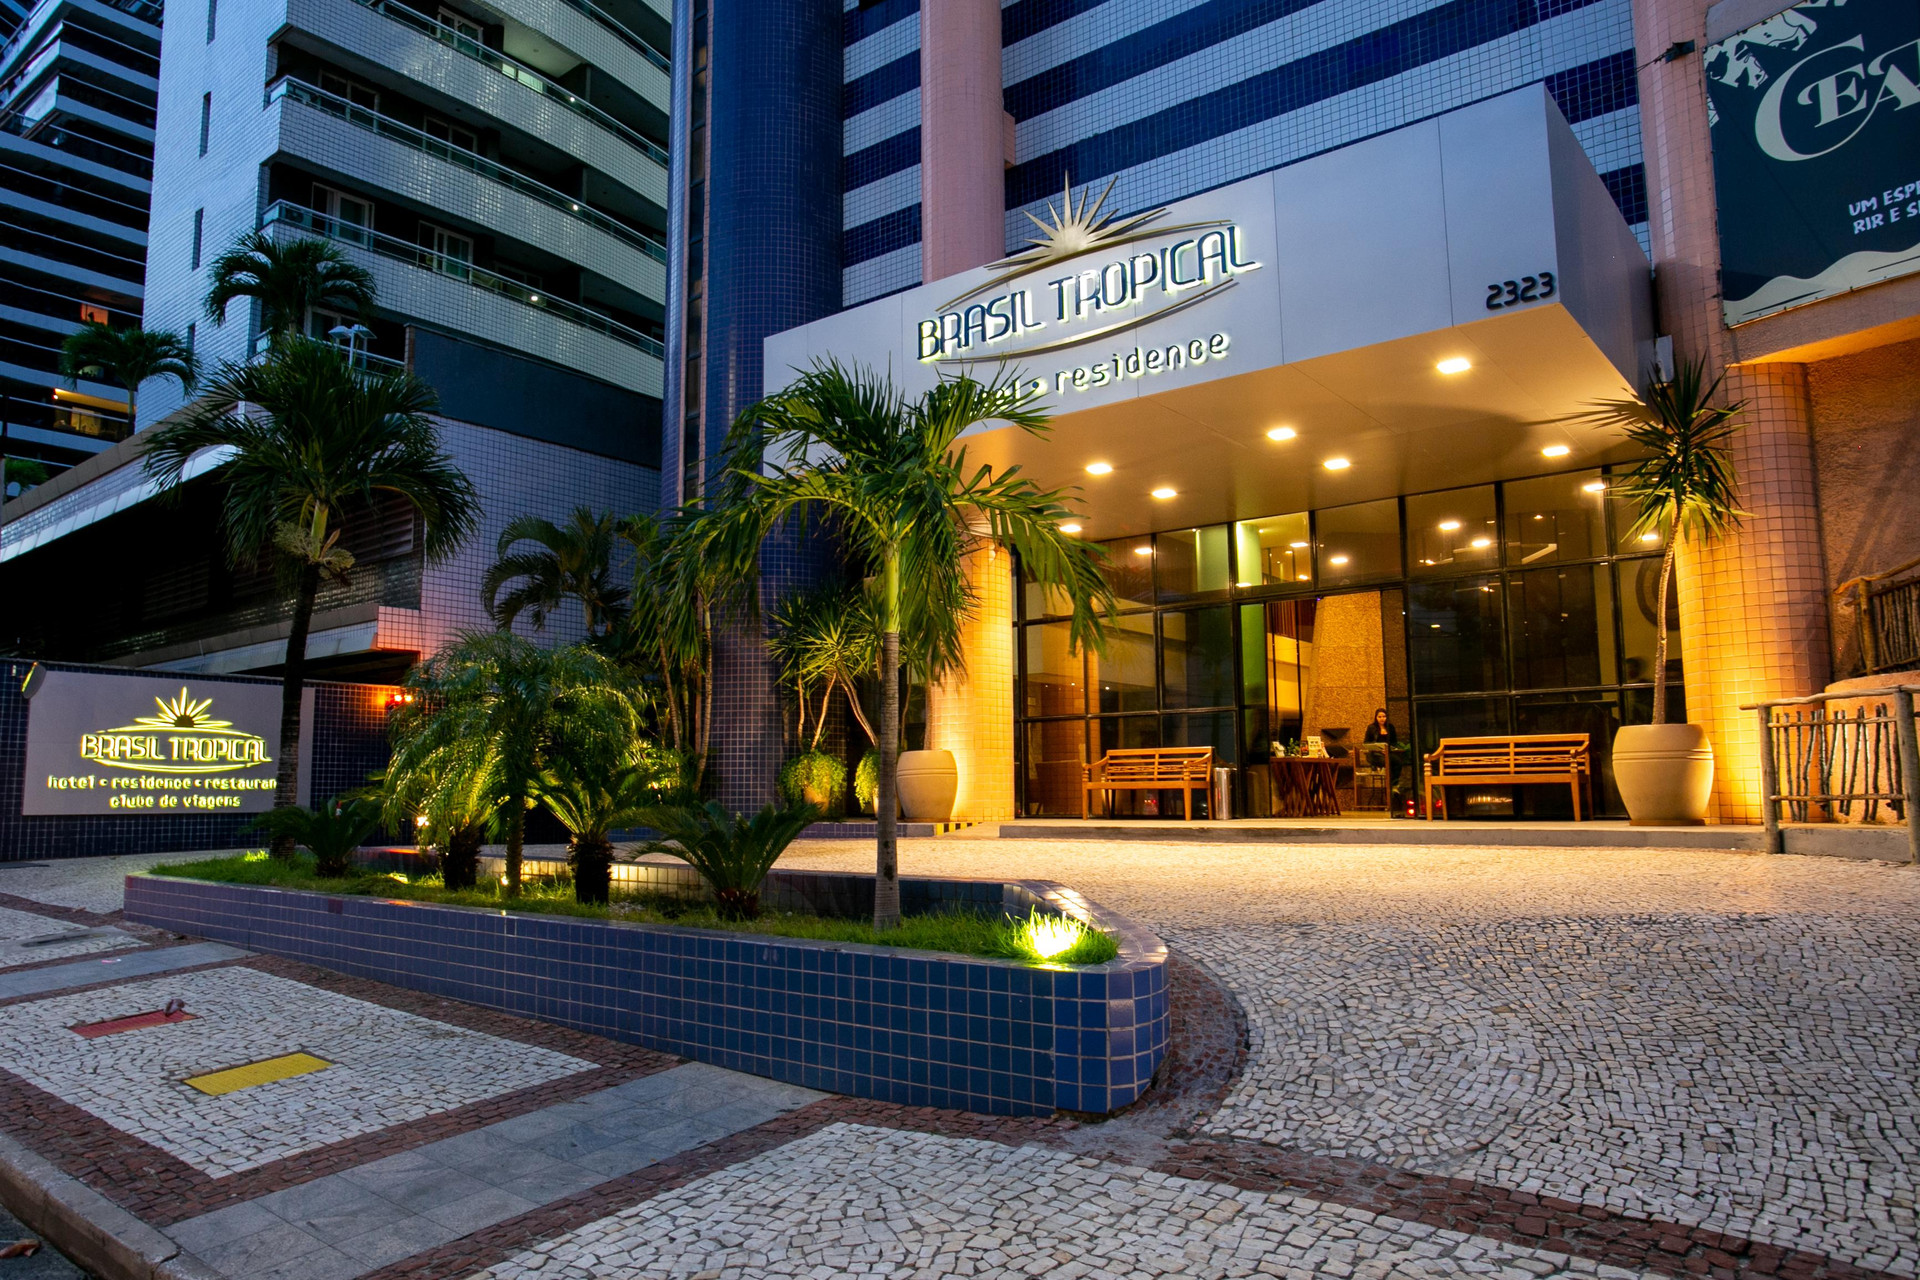 Vista da fachada Hotel Brasil Tropical